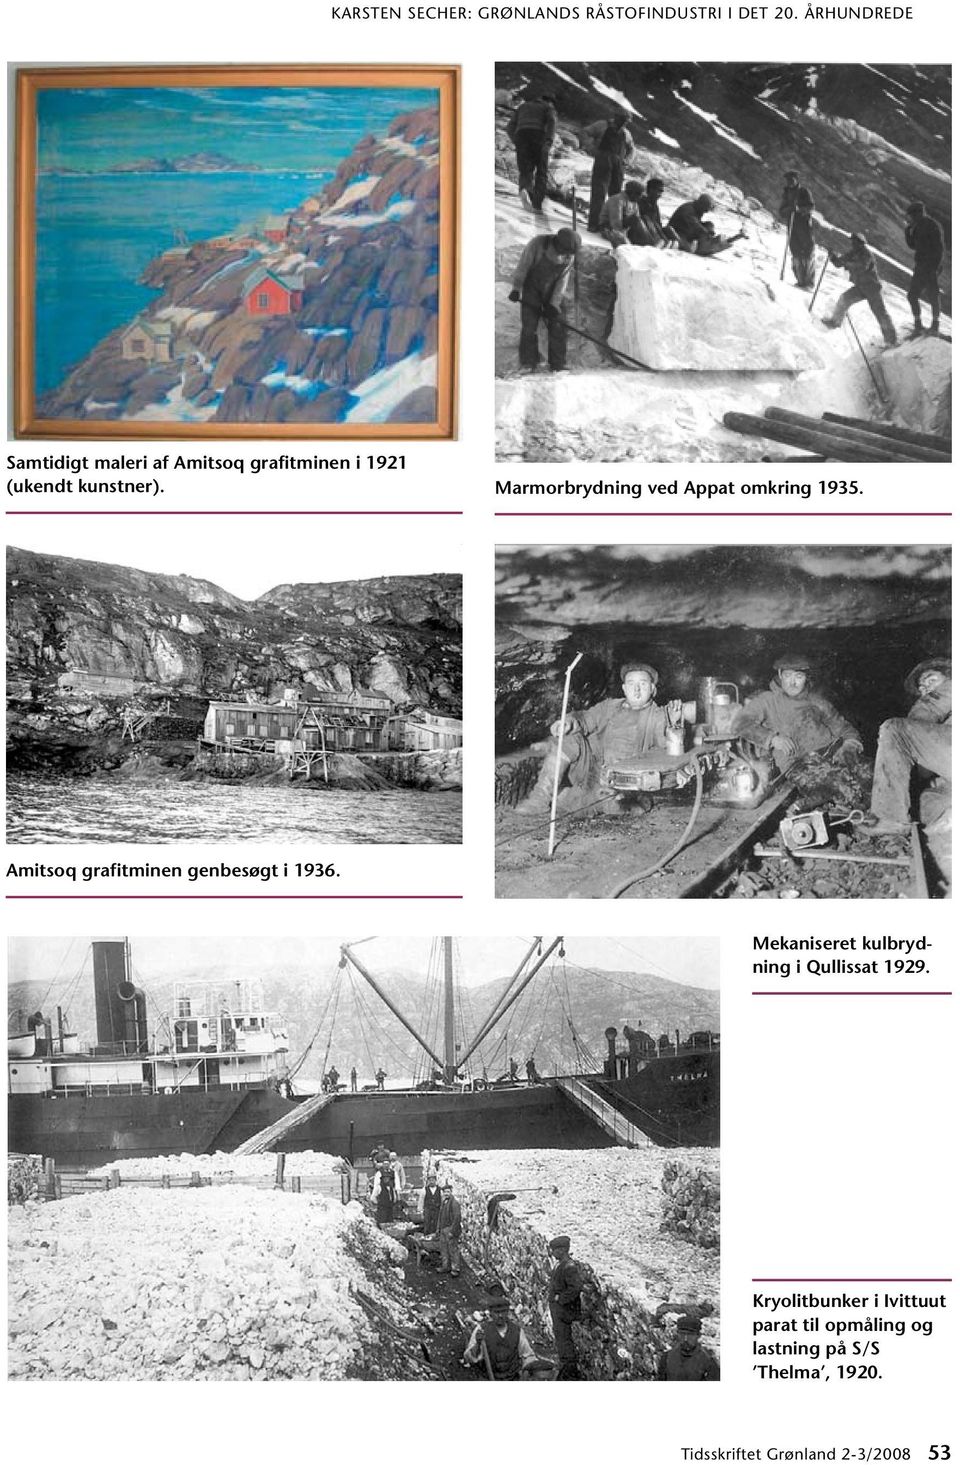 Marmorbrydning ved Appat omkring 1935. Amitsoq grafitminen genbesøgt i 1936.